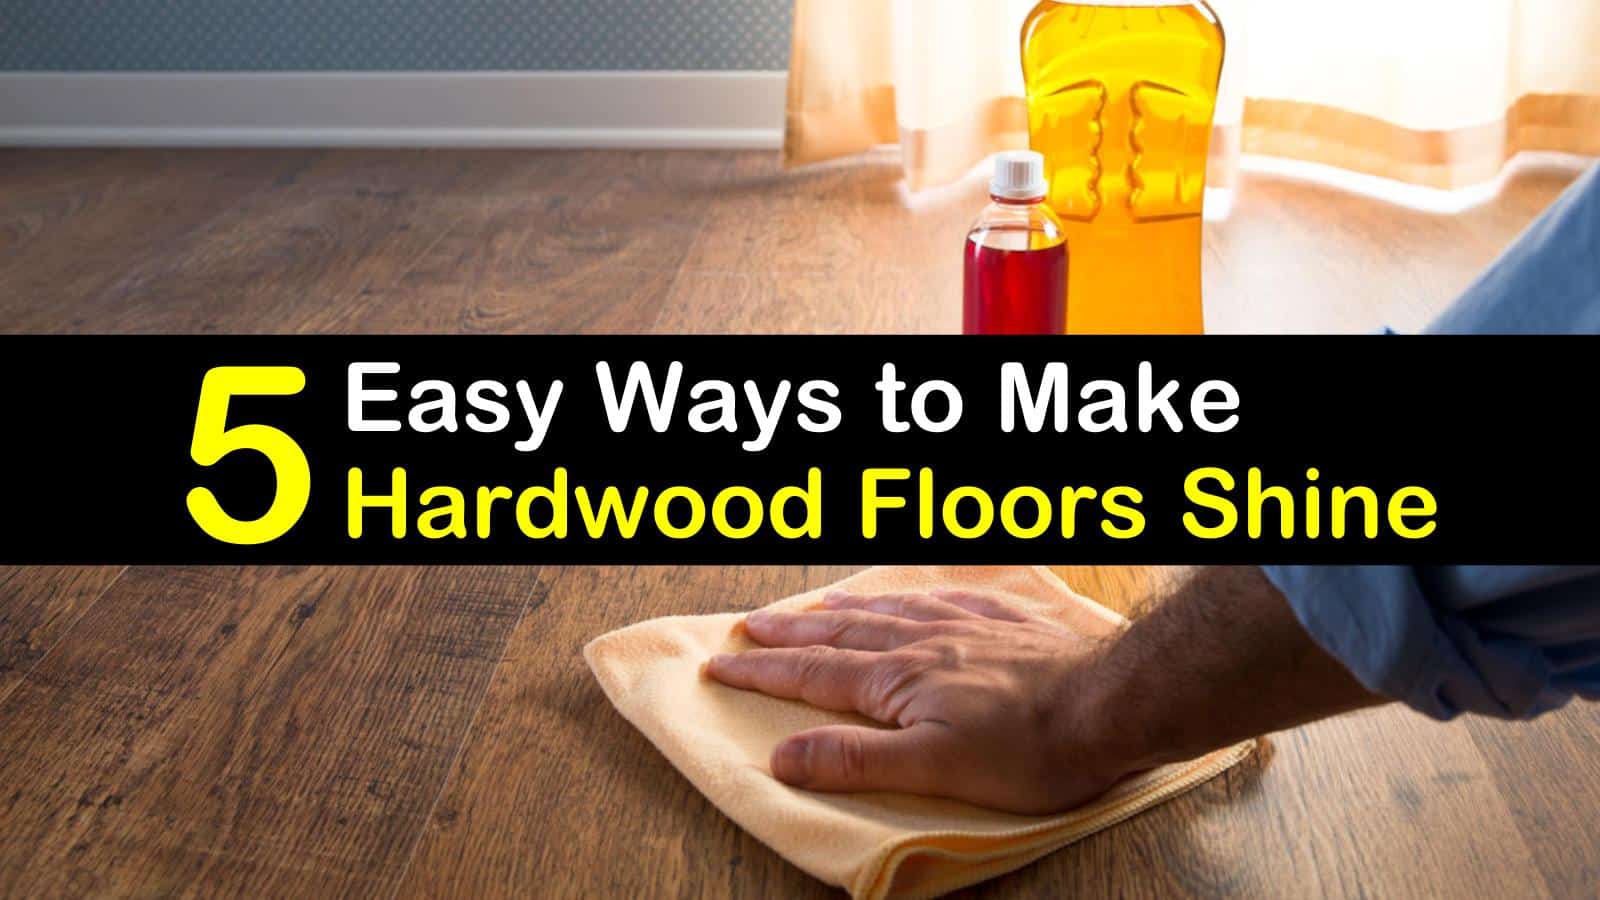 5 Easy Ways To Make Hardwood Floors Shine, How To Make Hardwood Floors